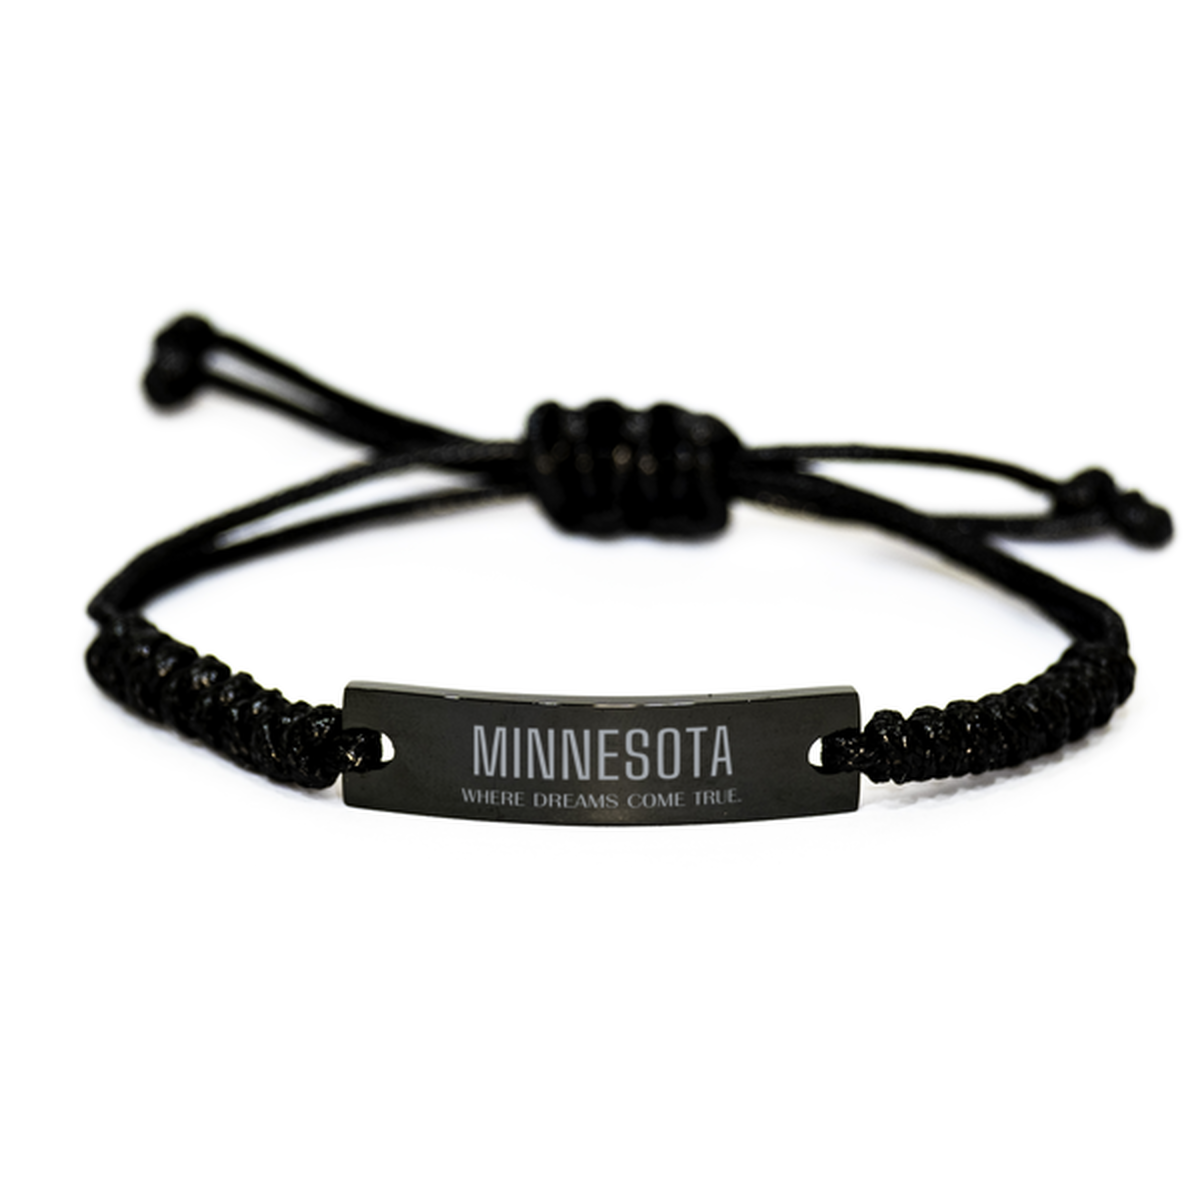 Love Minnesota State Black Rope Bracelet, Minnesota Where dreams come true, Birthday Inspirational Gifts For Minnesota Men, Women, Friends